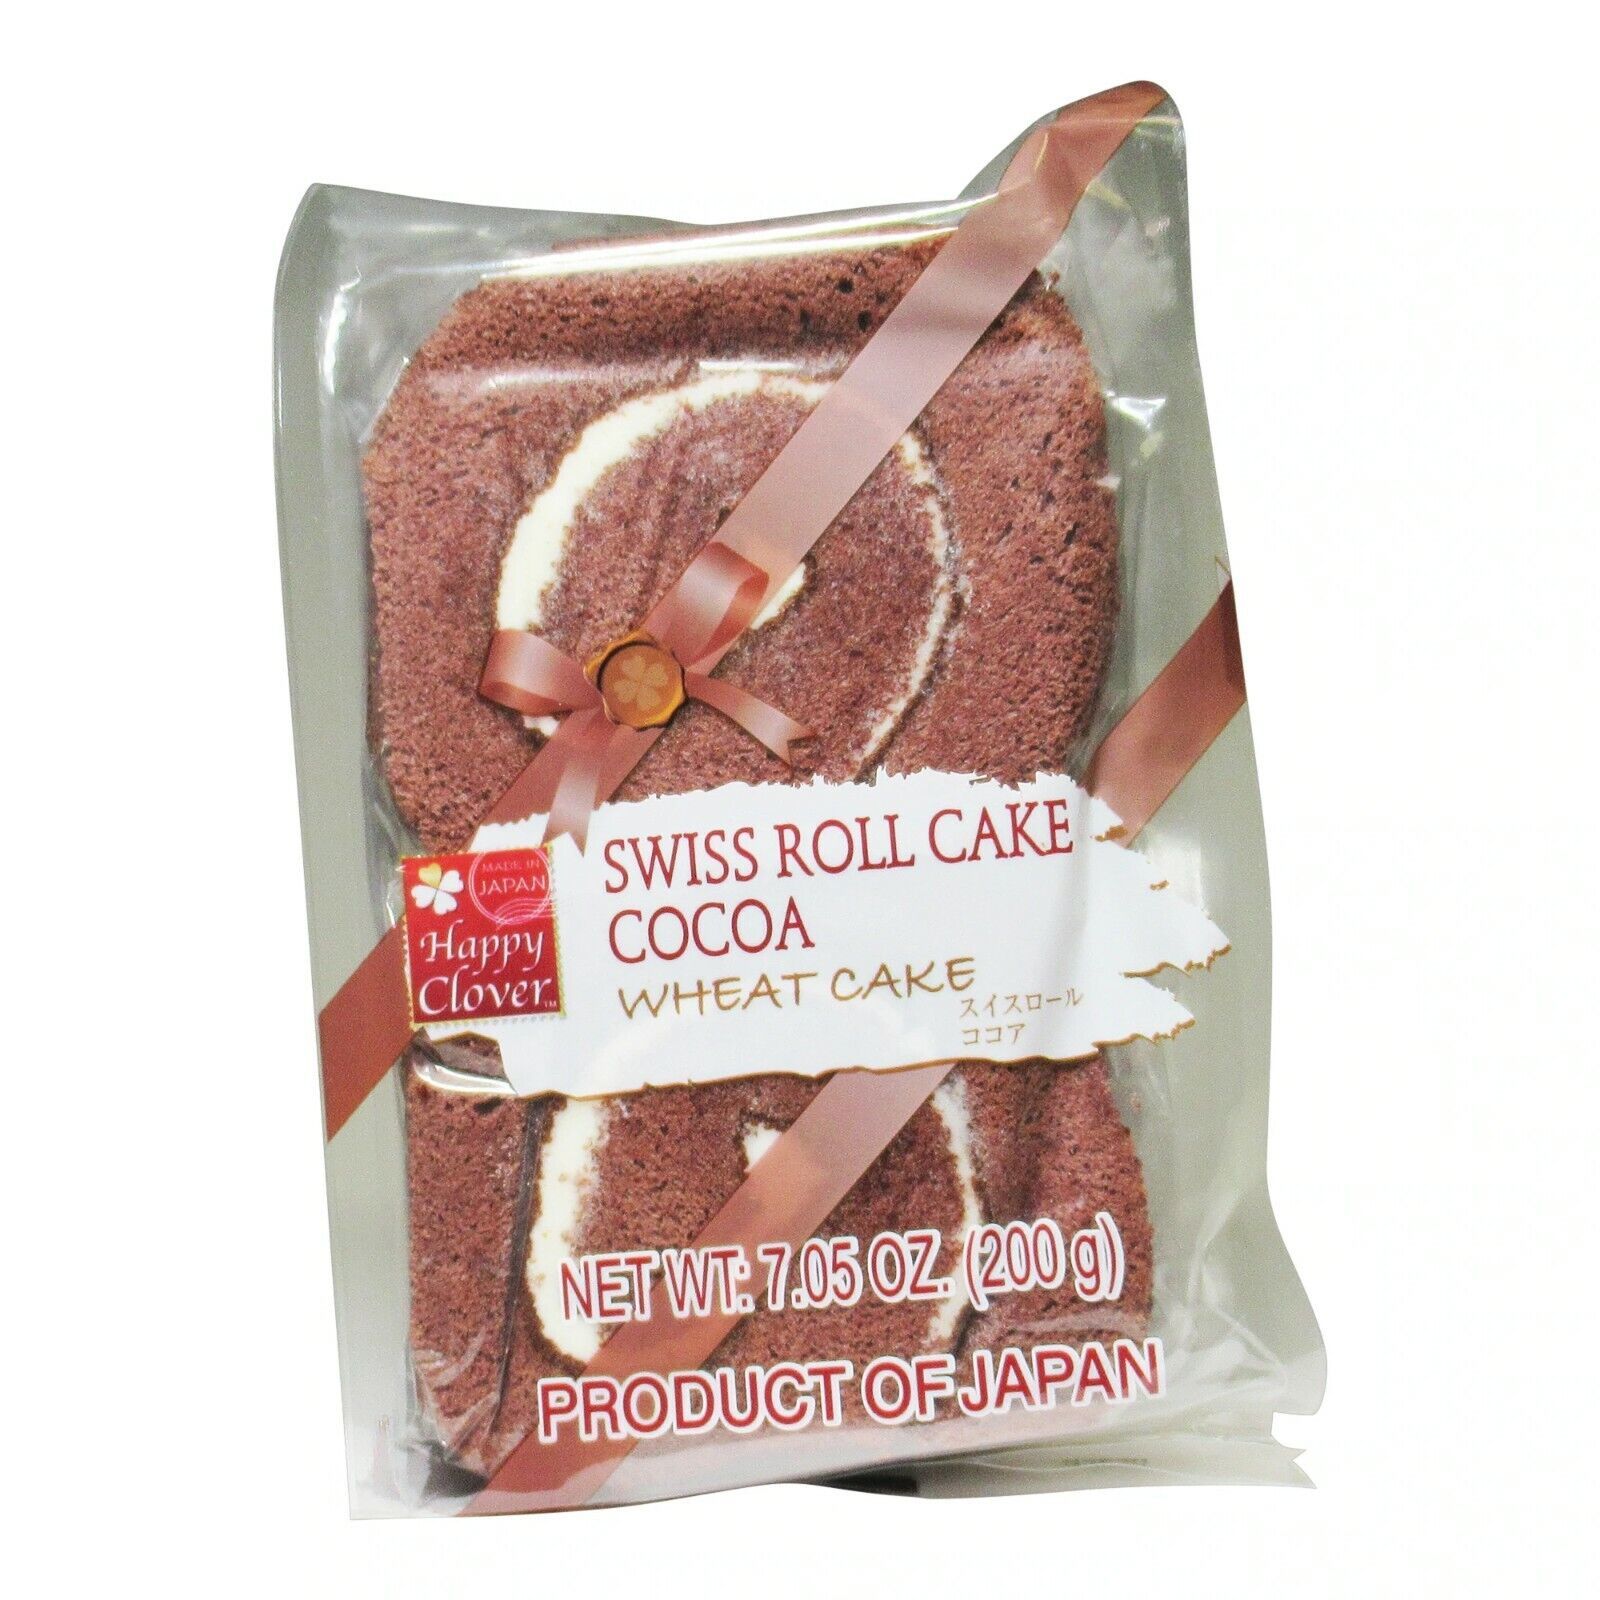 Shirakiku Swiss Roll Cake Cocoa Wheat Cake Confectionery 7.05 oz - $12.16